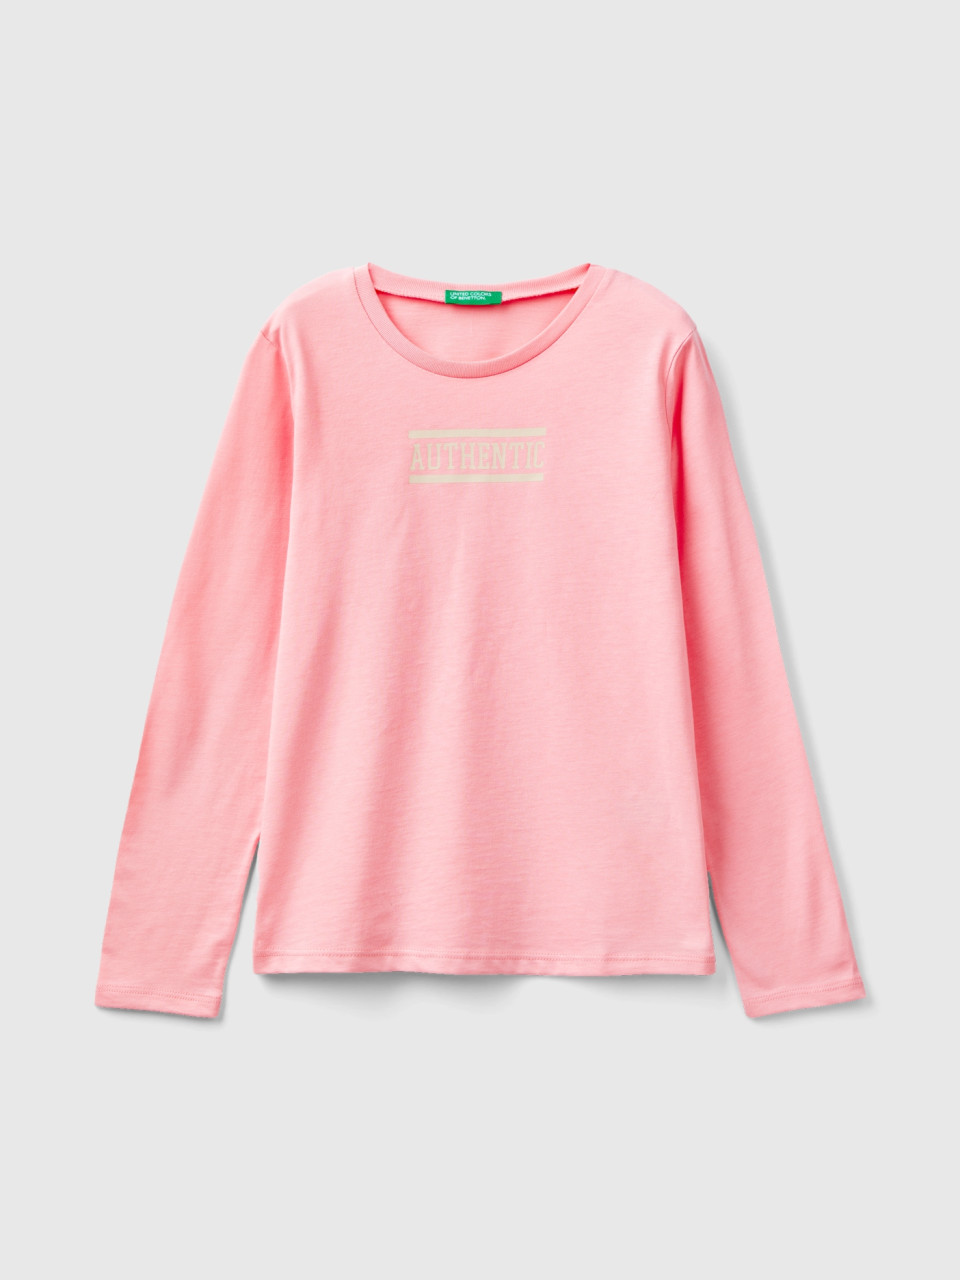 Benetton, T-shirt With Text Print, Pink, Kids